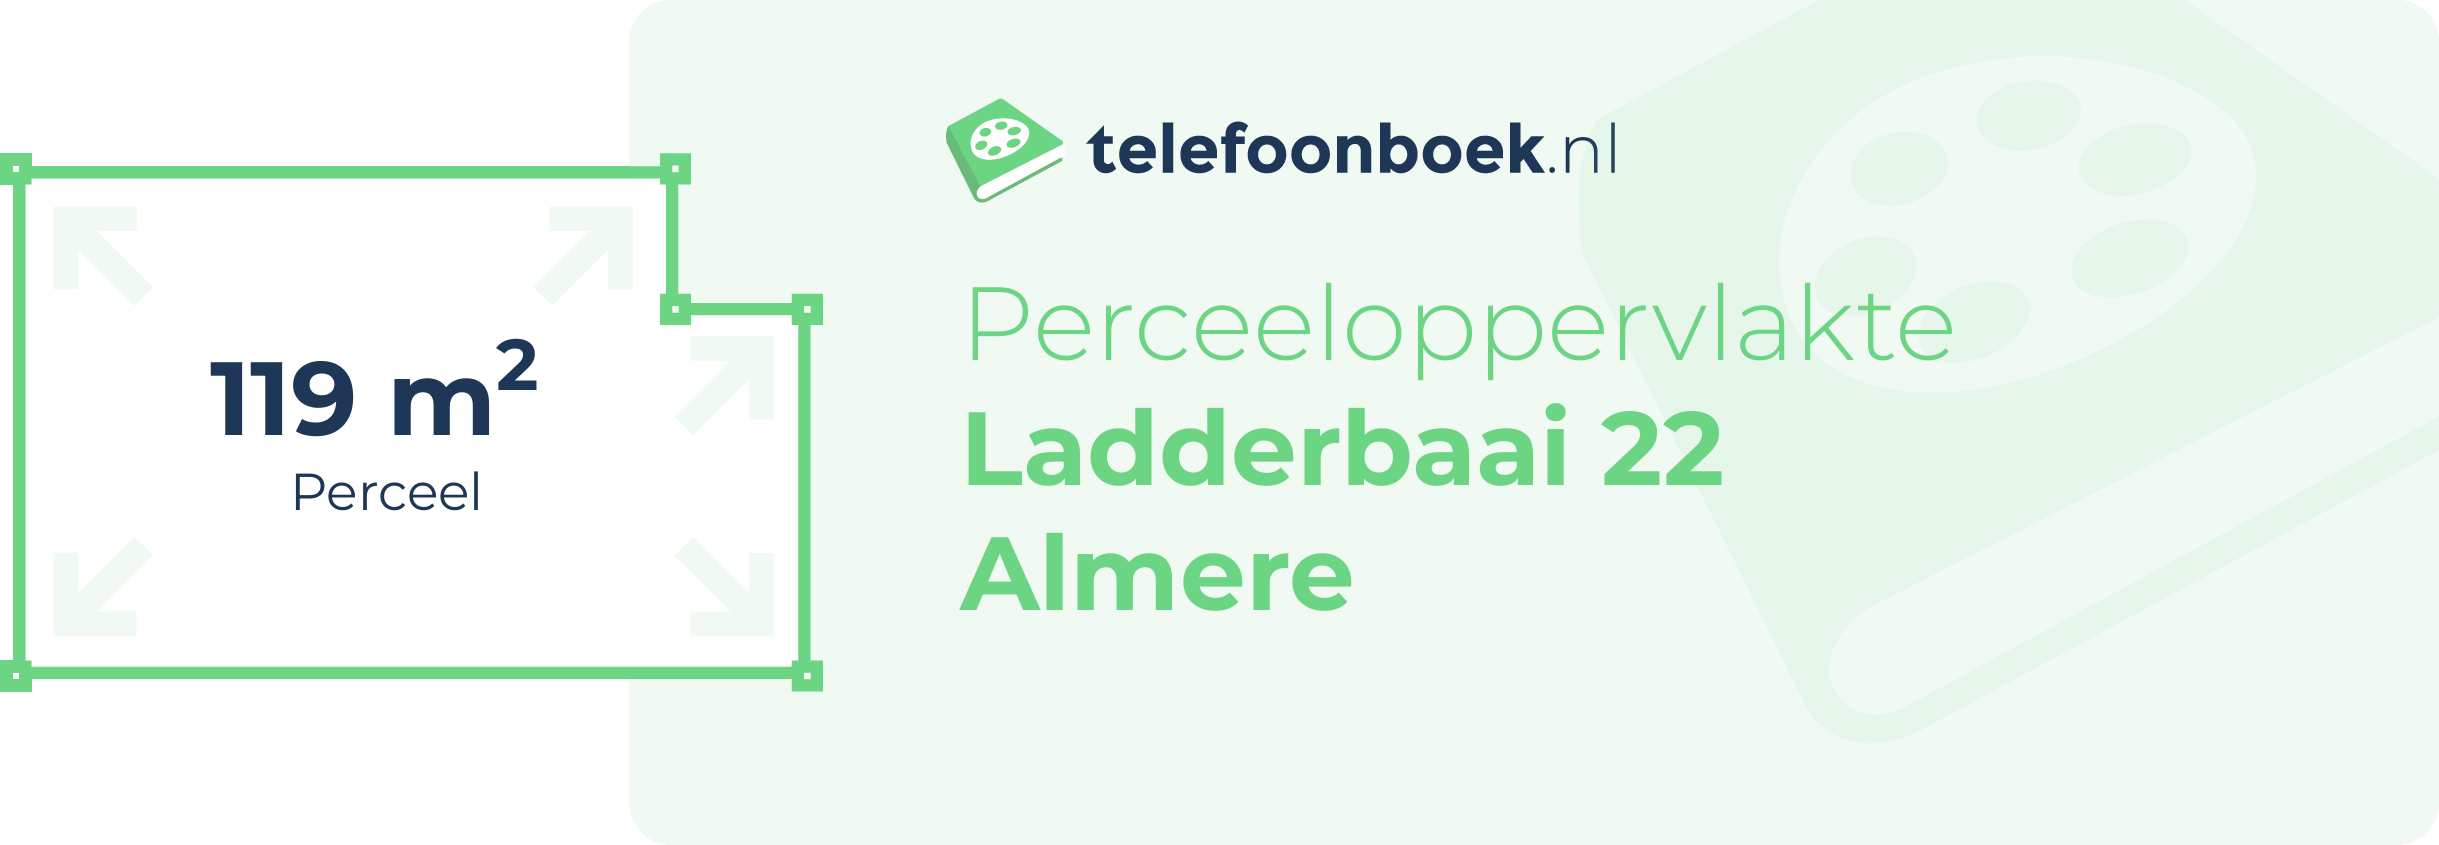 Perceeloppervlakte Ladderbaai 22 Almere